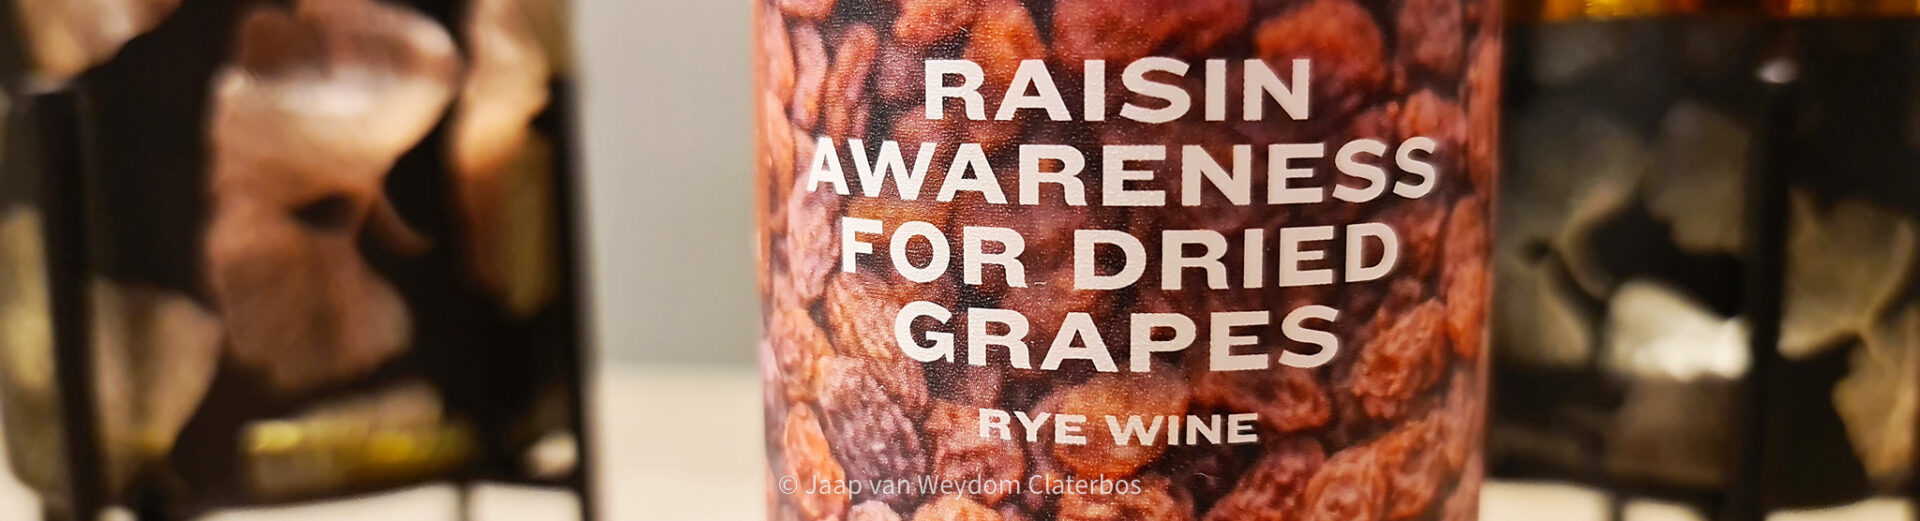 Raisin Awareness for Dried Grapes | Moersleutel Beer Engineers